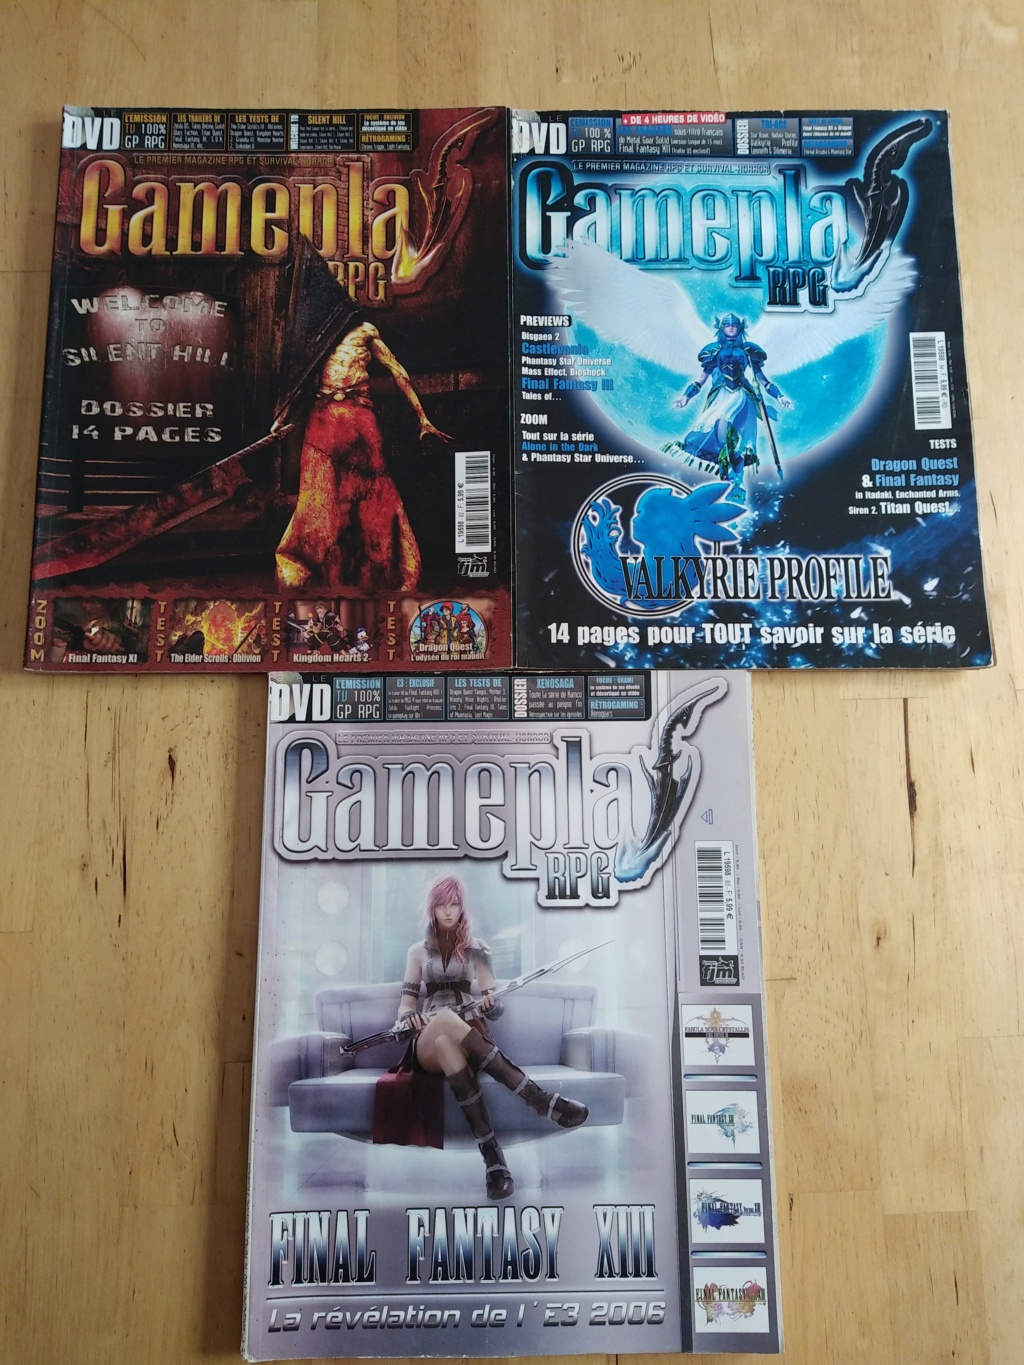 [VENDU] Magazines jeux vidéo "Background", "RPG" et "Gameplay rpg" Img_2076